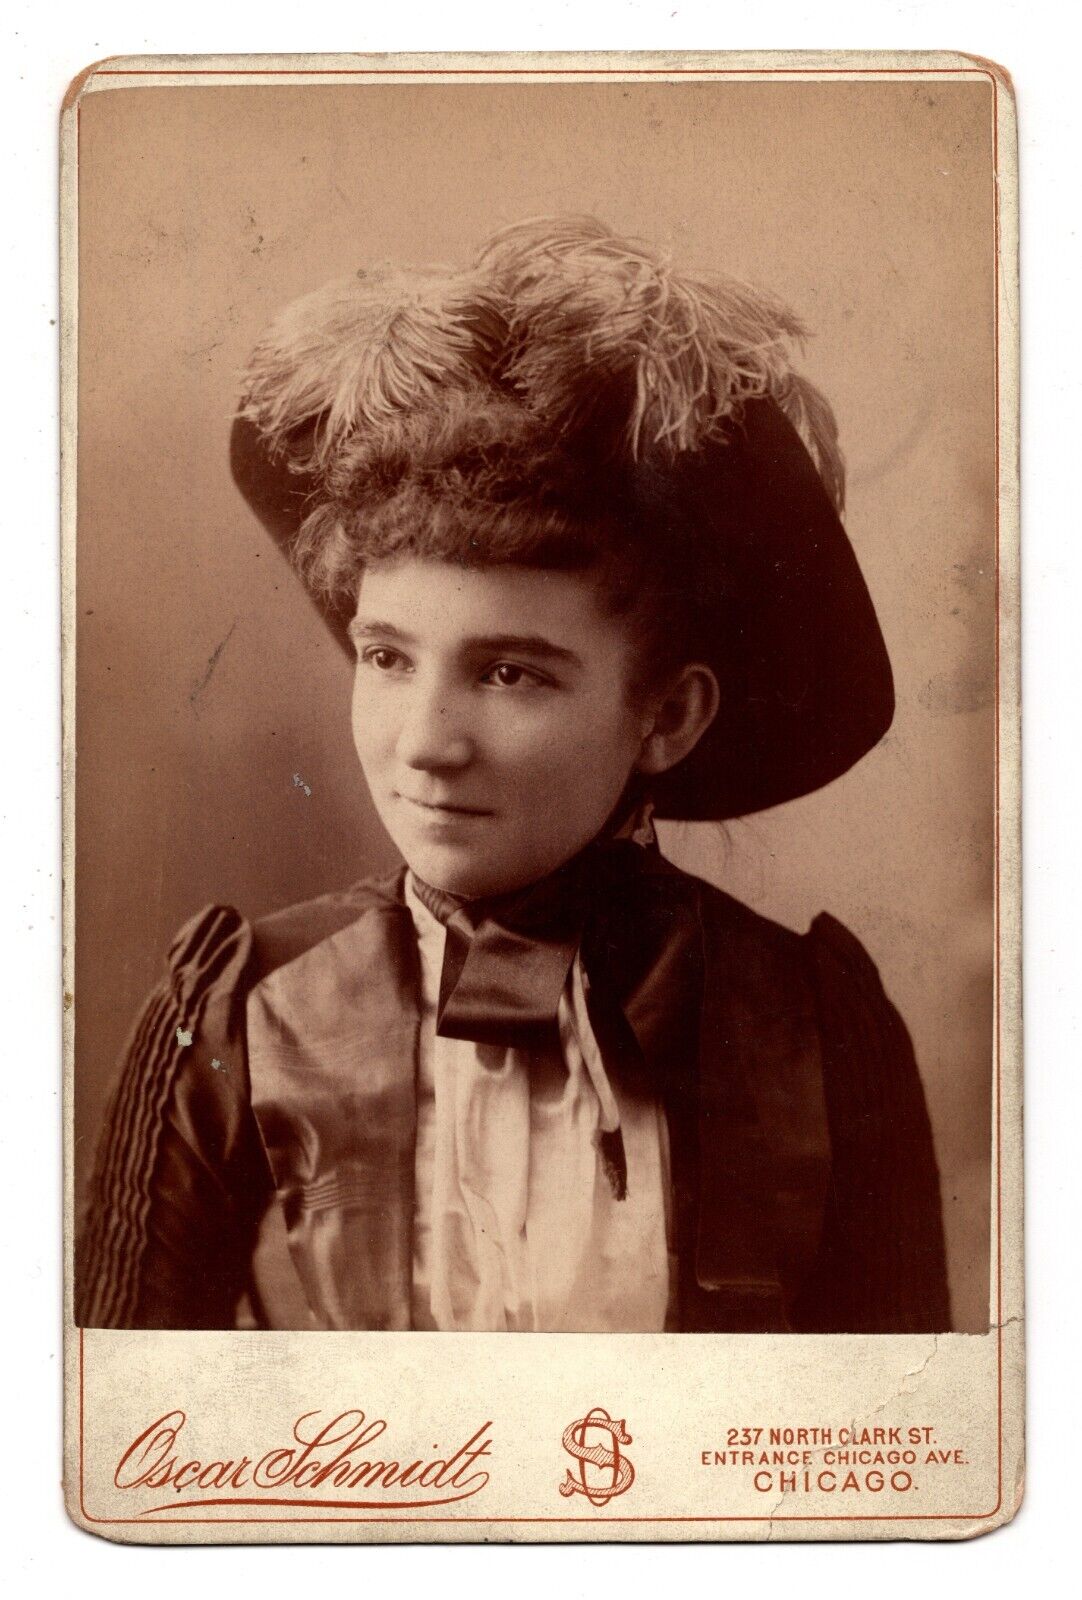 CIRCA 1890s CABINET CARD OSCAR SCHMIDT GORGEOUS YOUNG LADY CHICAGO ILLINOIS